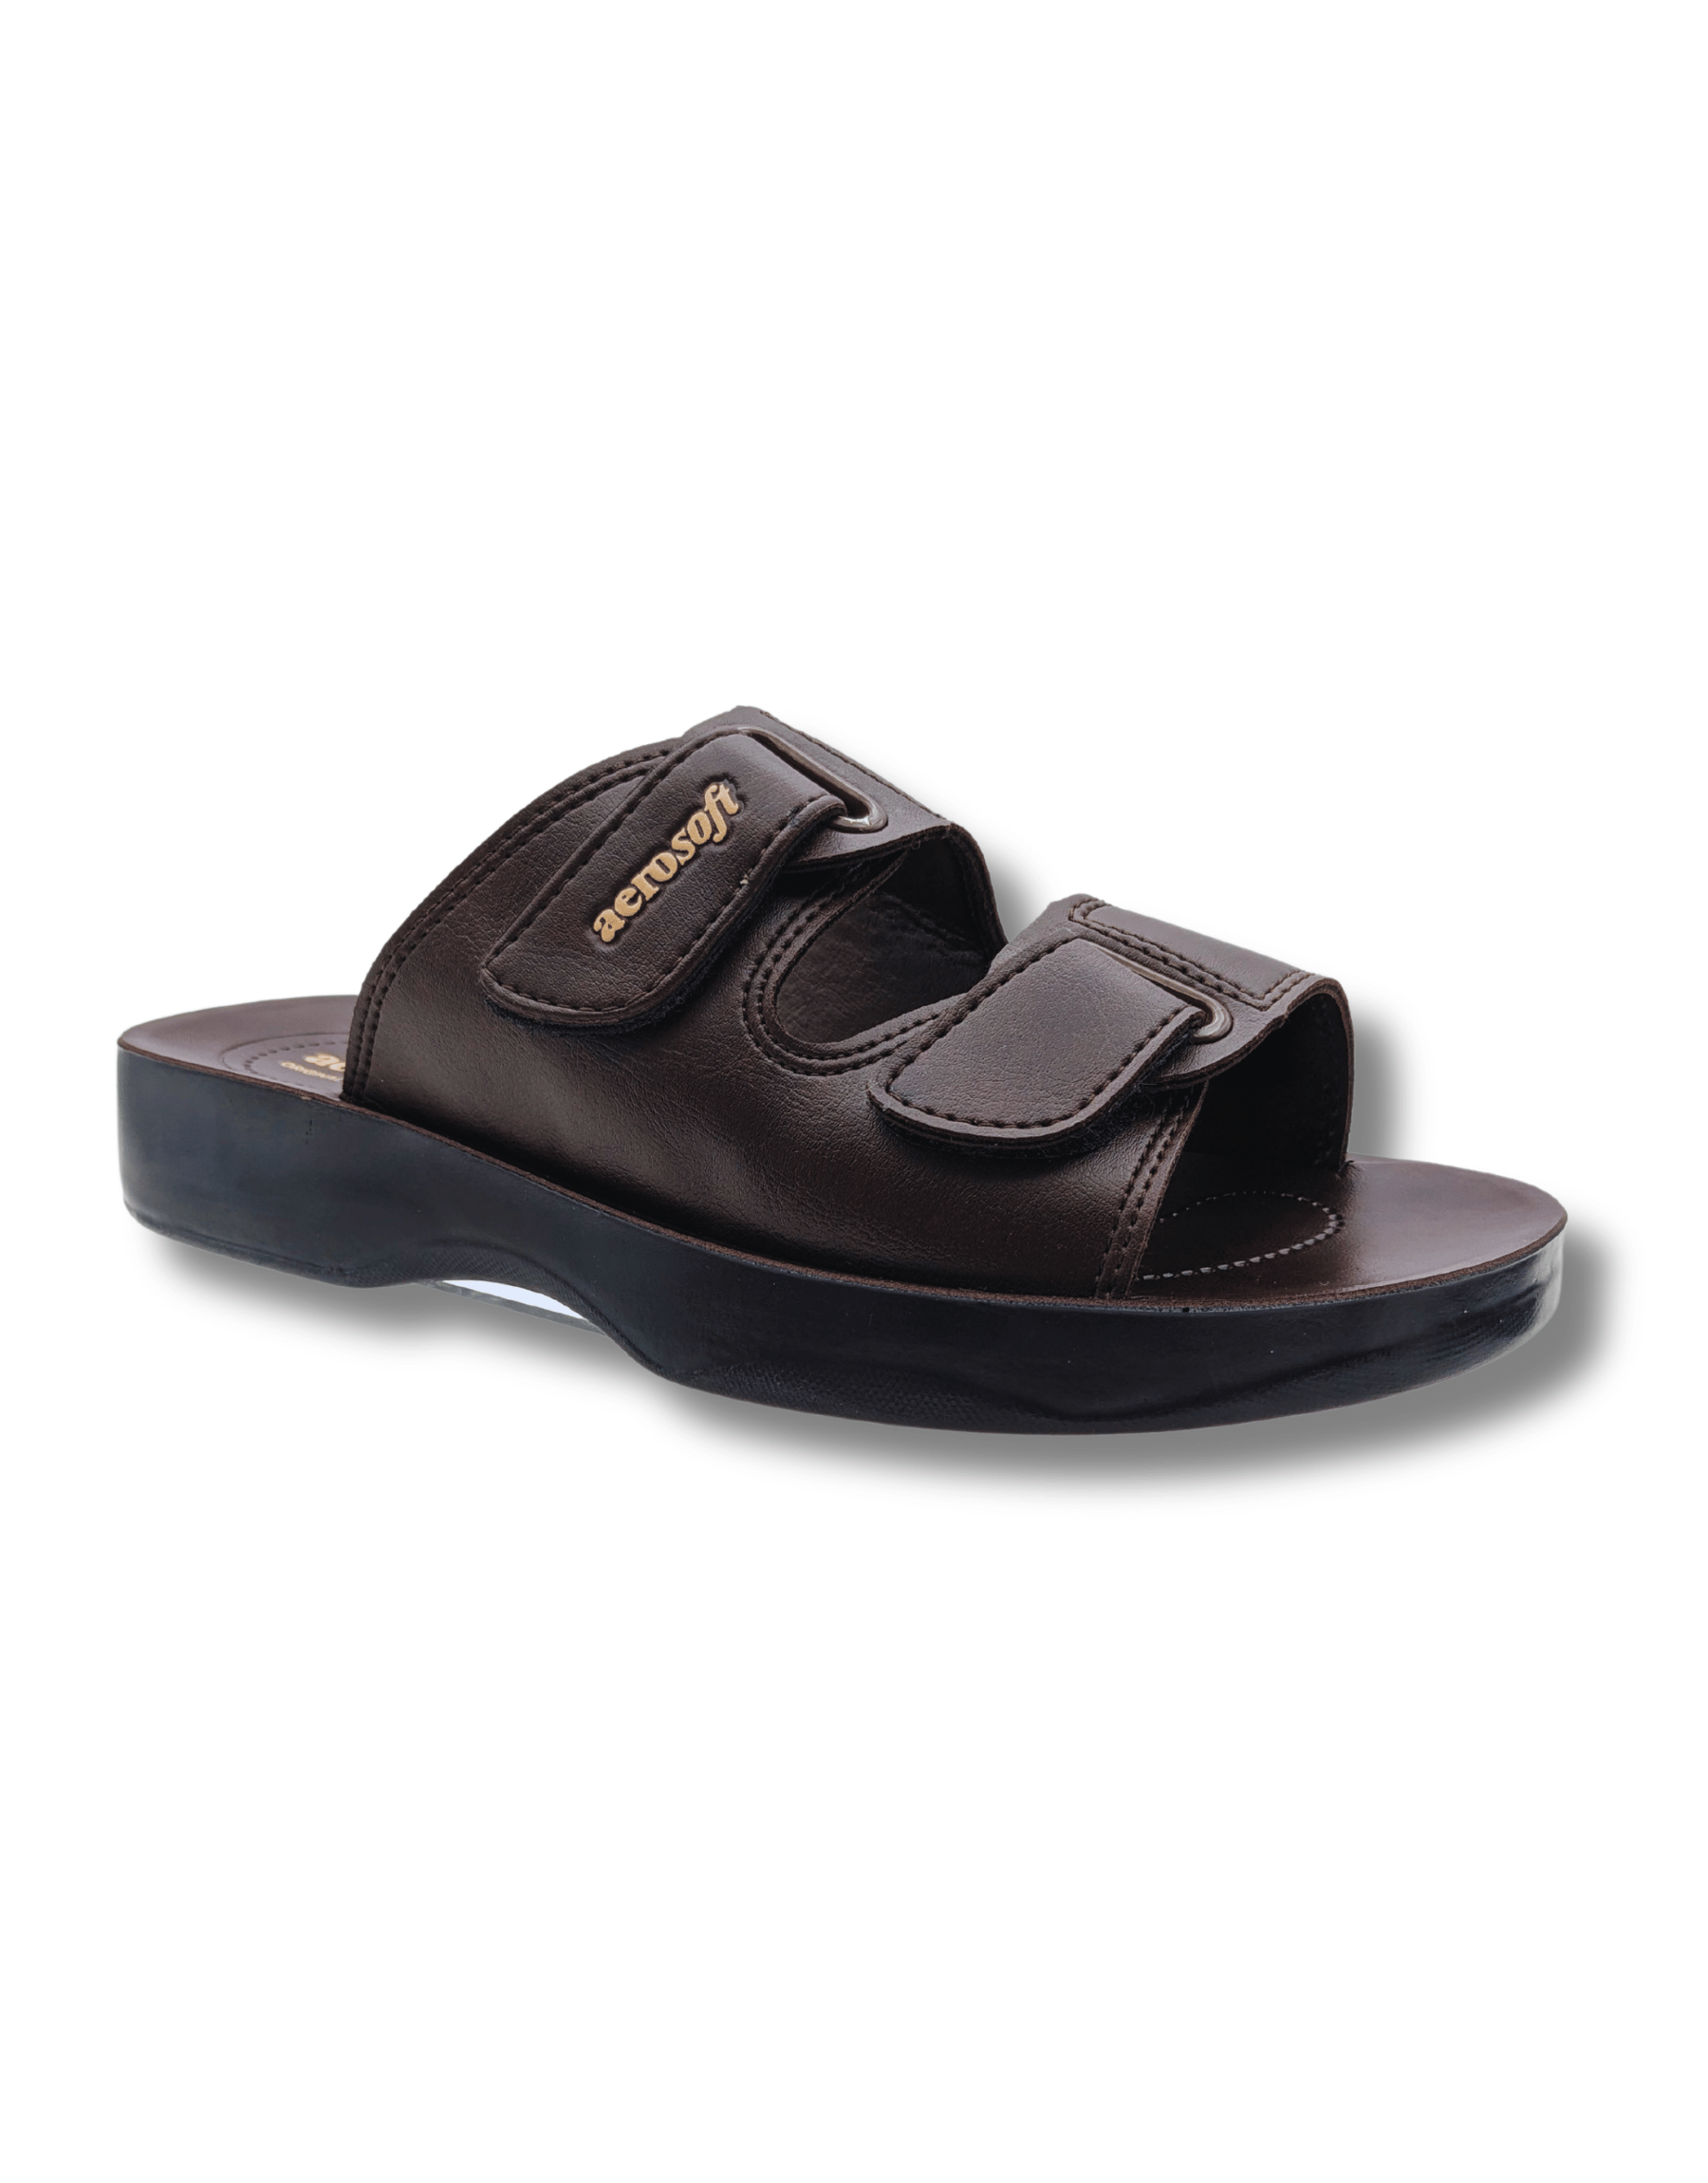 Aerosoft Footwear A5805BlackUS Men 8 Classico Men Sandals - Black, US  Size 8 - Walmart.ca